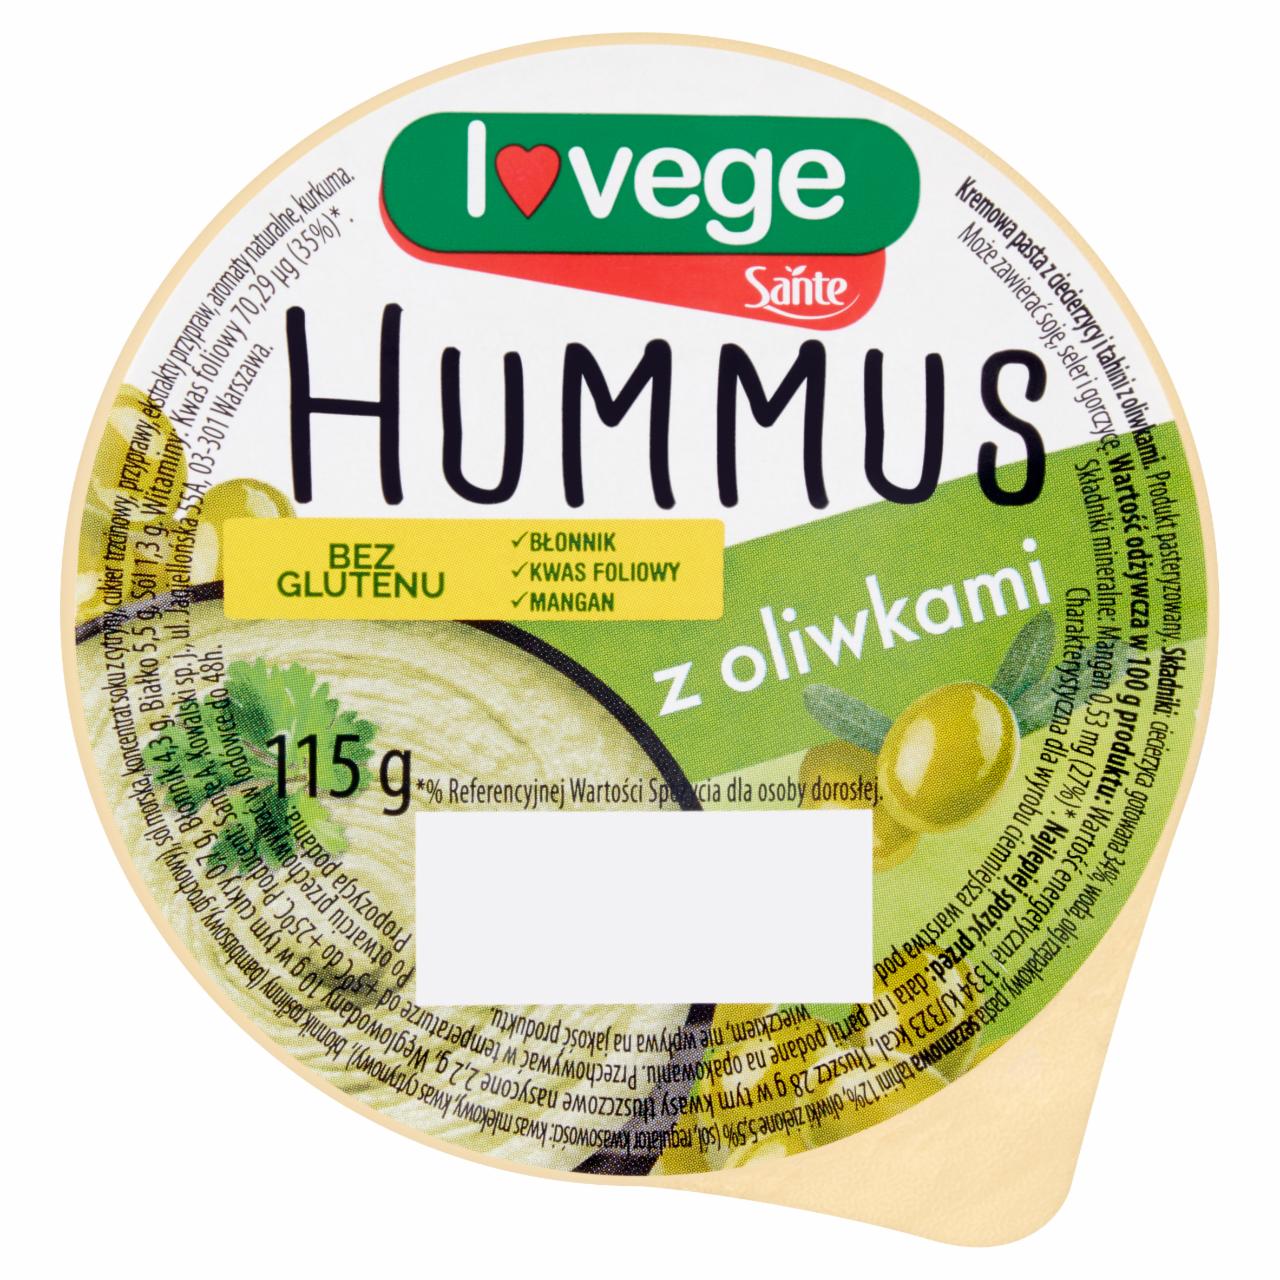 Zdjęcia - Sante Hummus z oliwkami 115 g